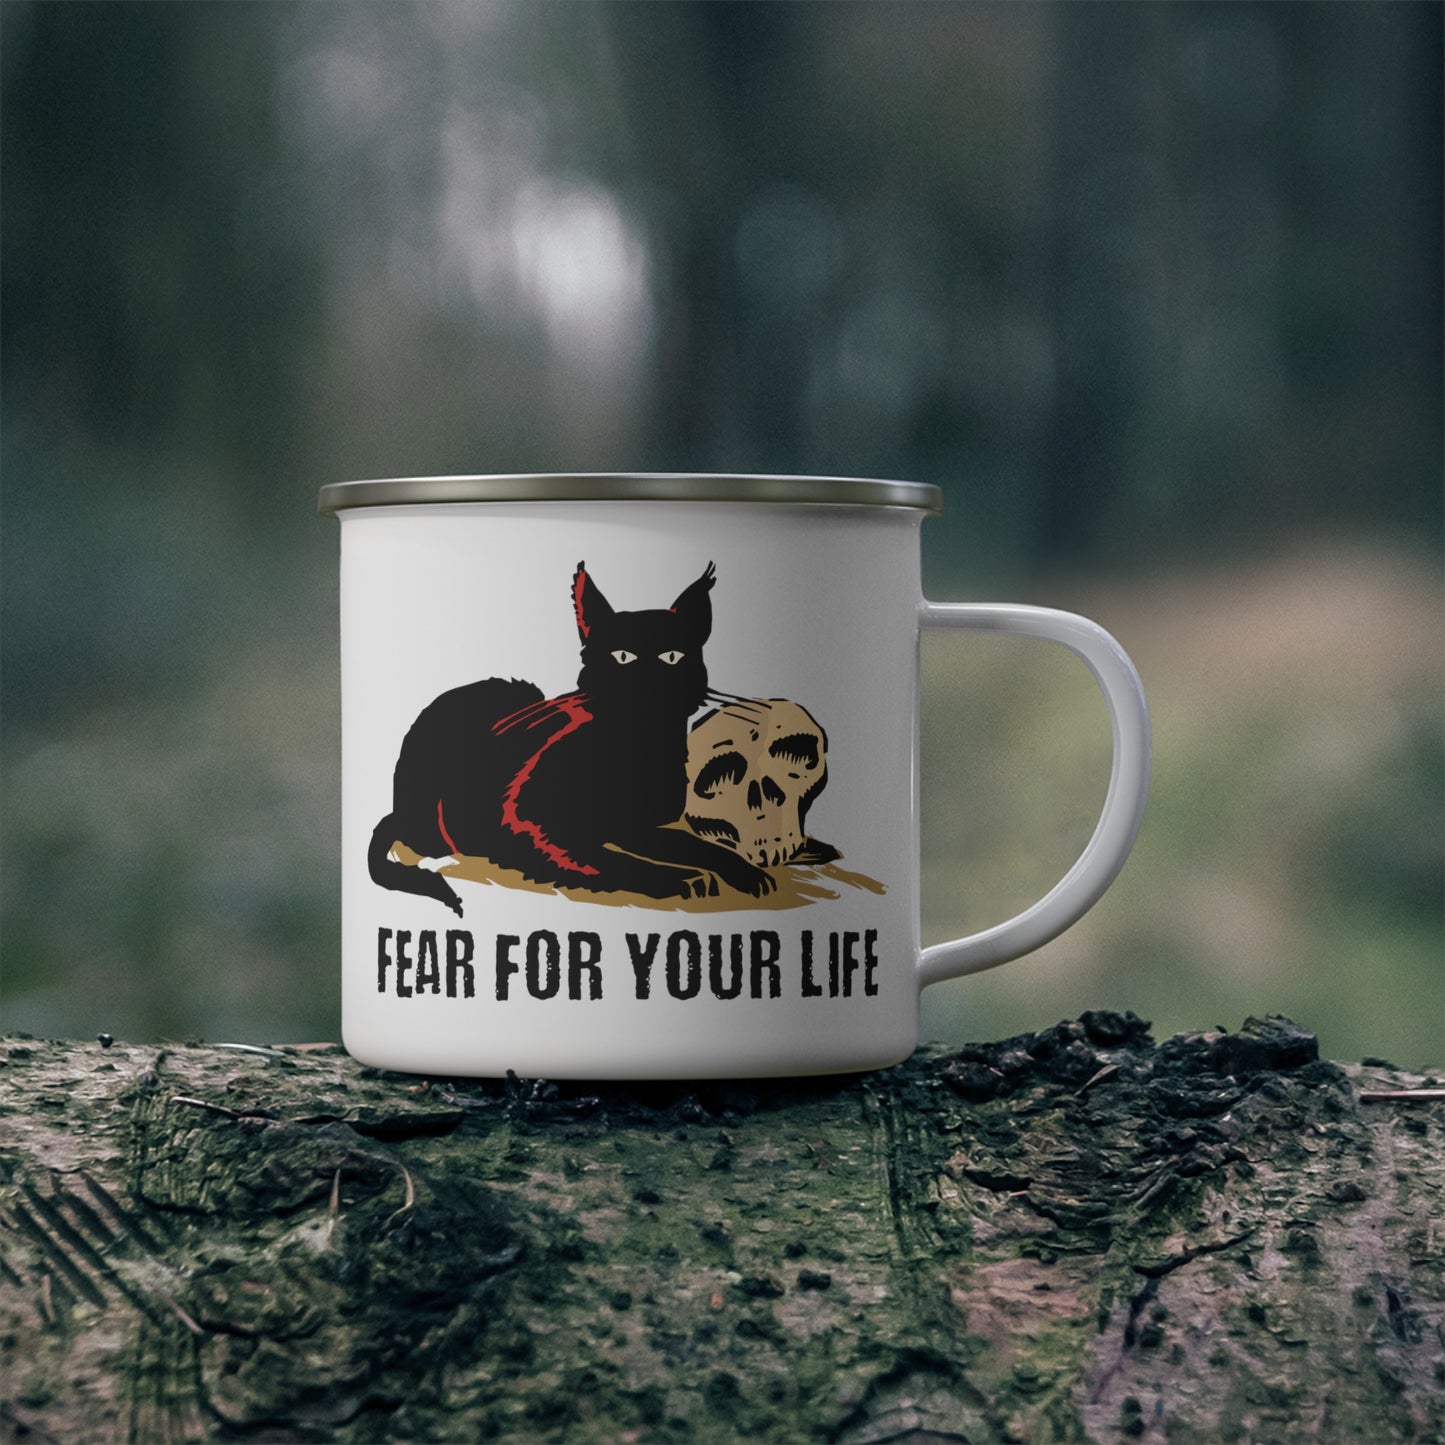 Black Cat Says Fear For Your Life Enamel Mug, Sarcastic cat mug, Cat lover mug, Funny cat mug, Spooky cat coffee mug, Creepy camping mug